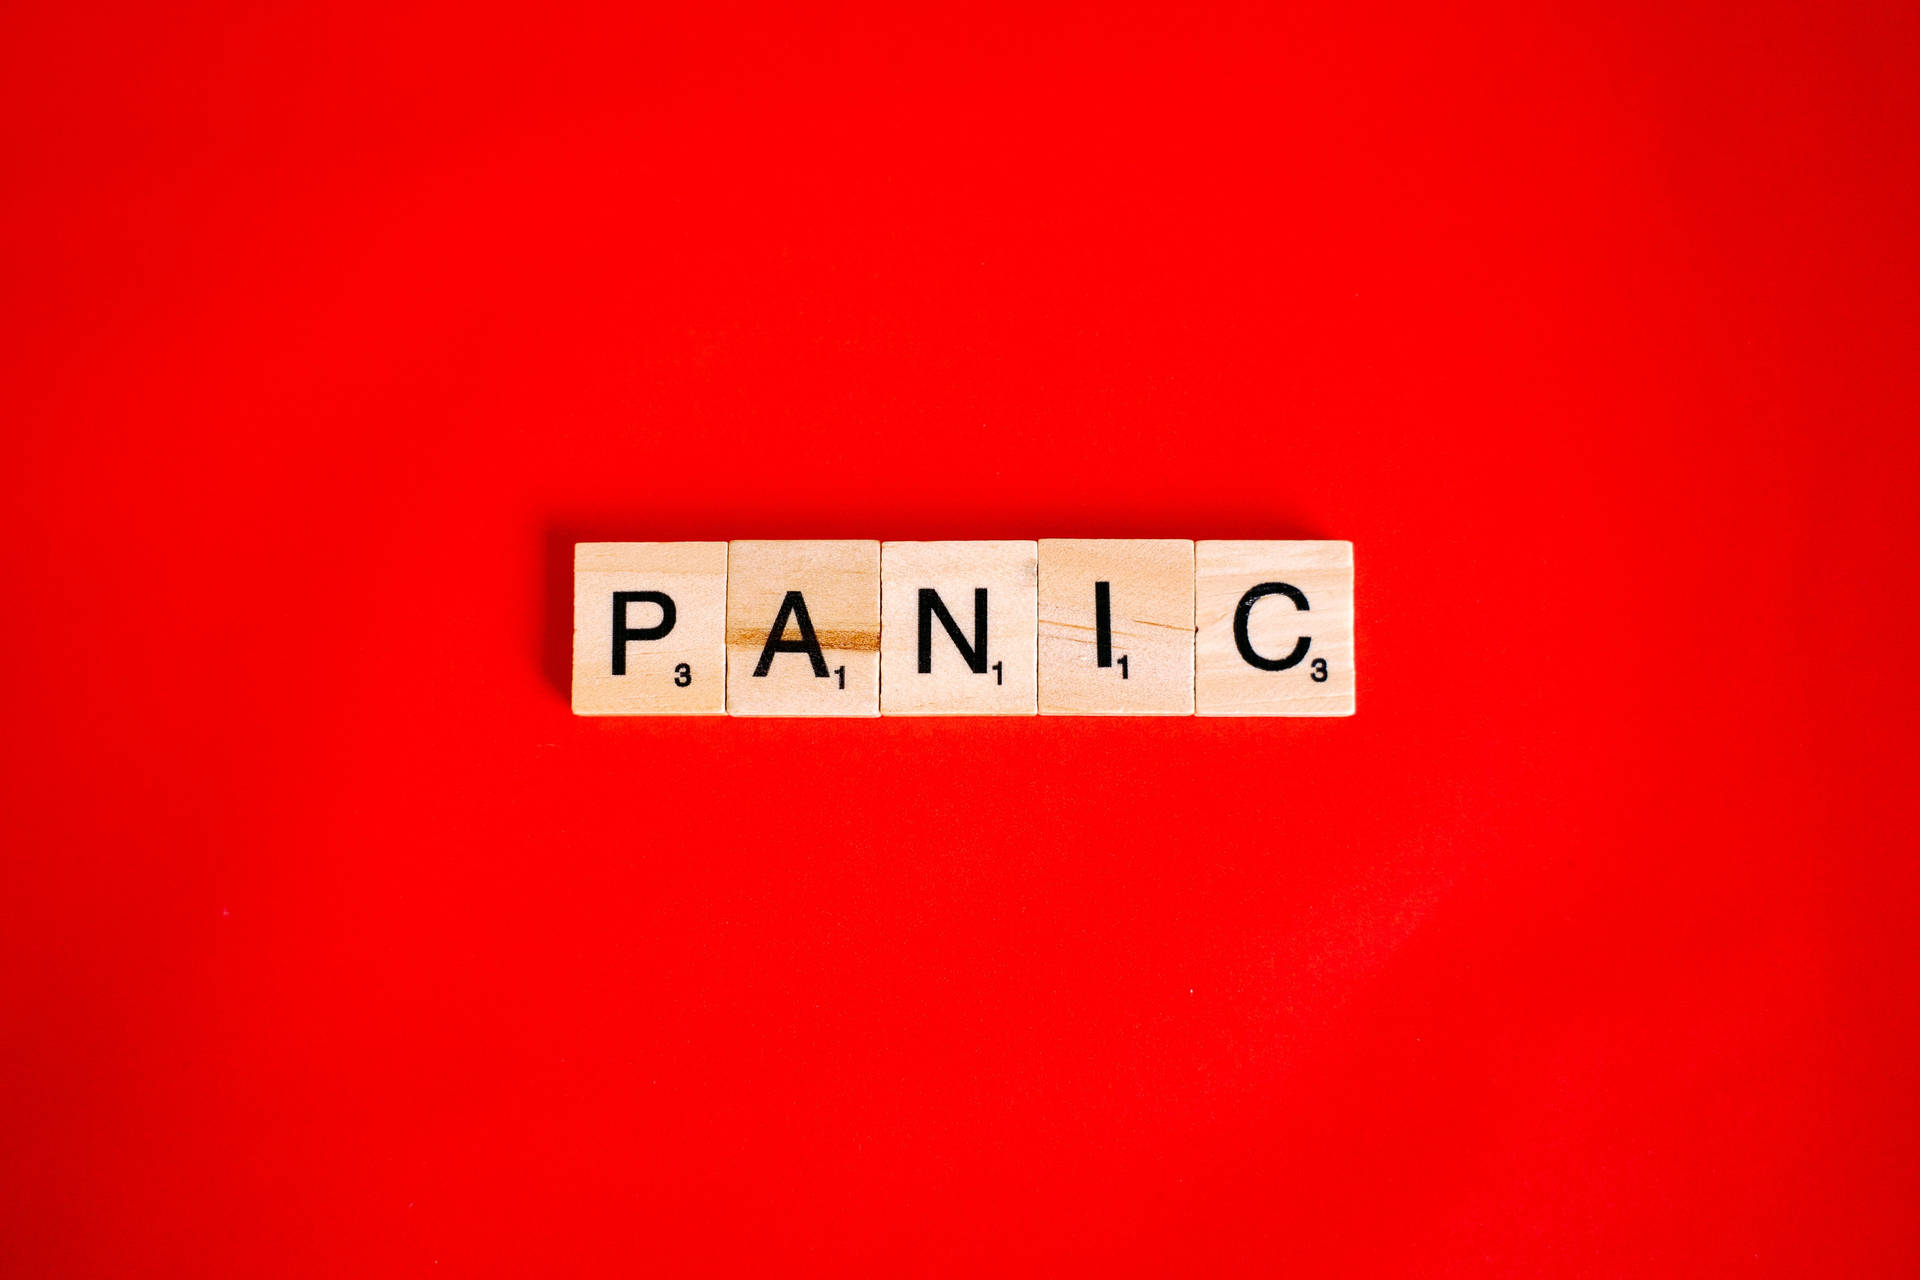 Panic Scrabble Tiles